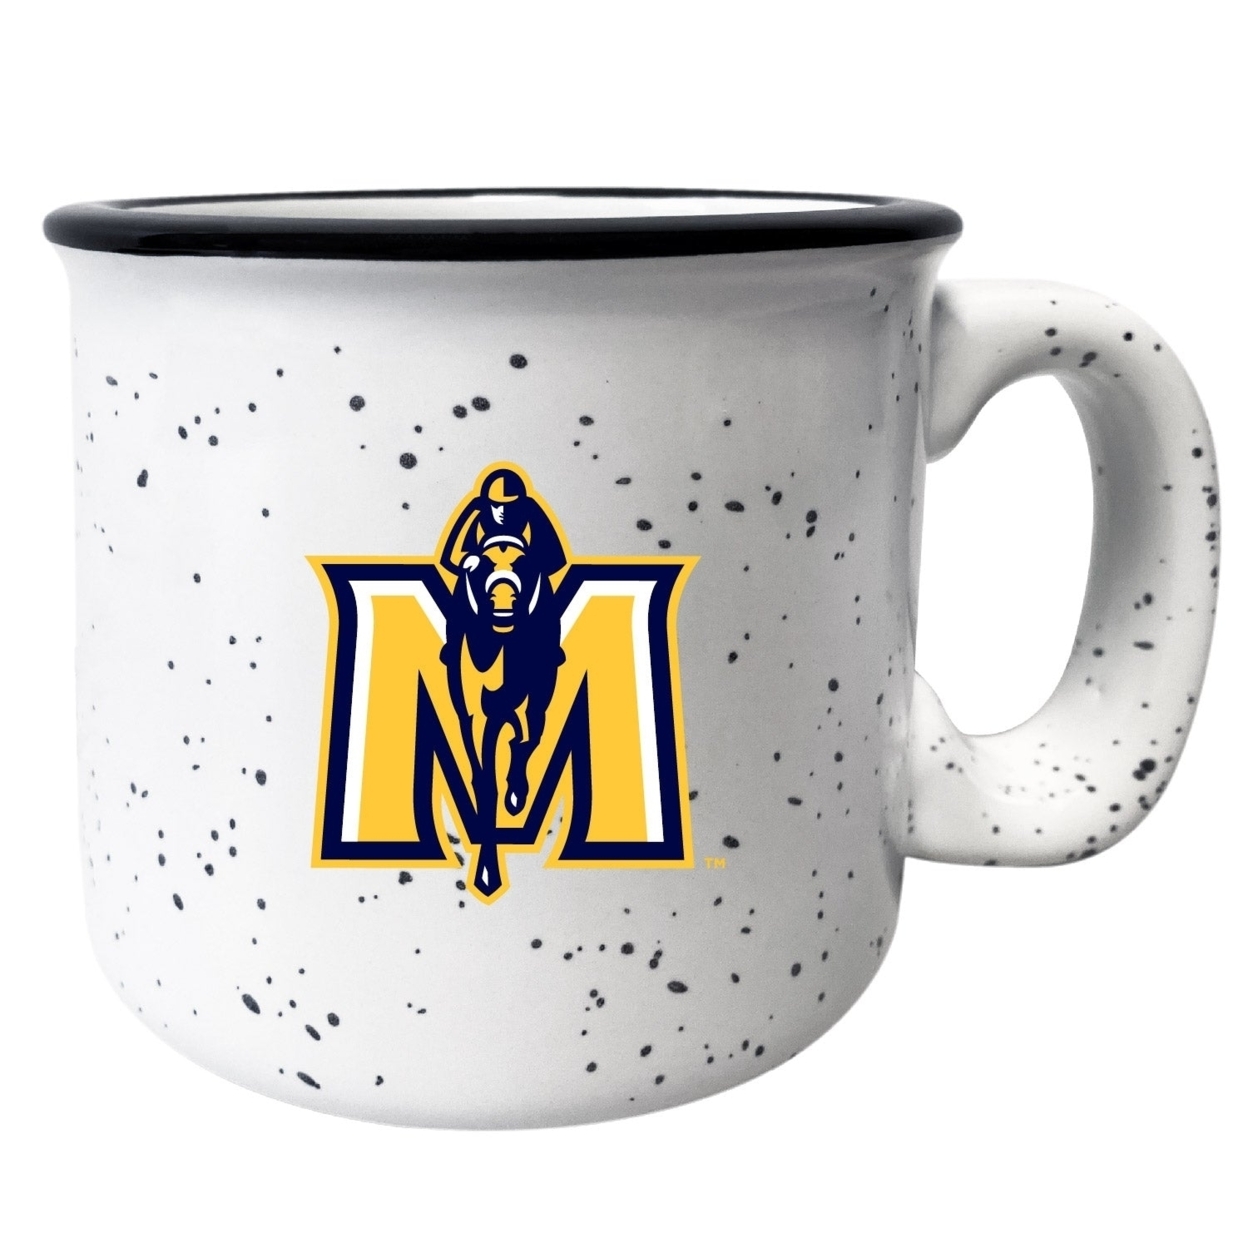 Murray State University 8 Oz Speckled Ceramic Camper Coffee Mug White (White).